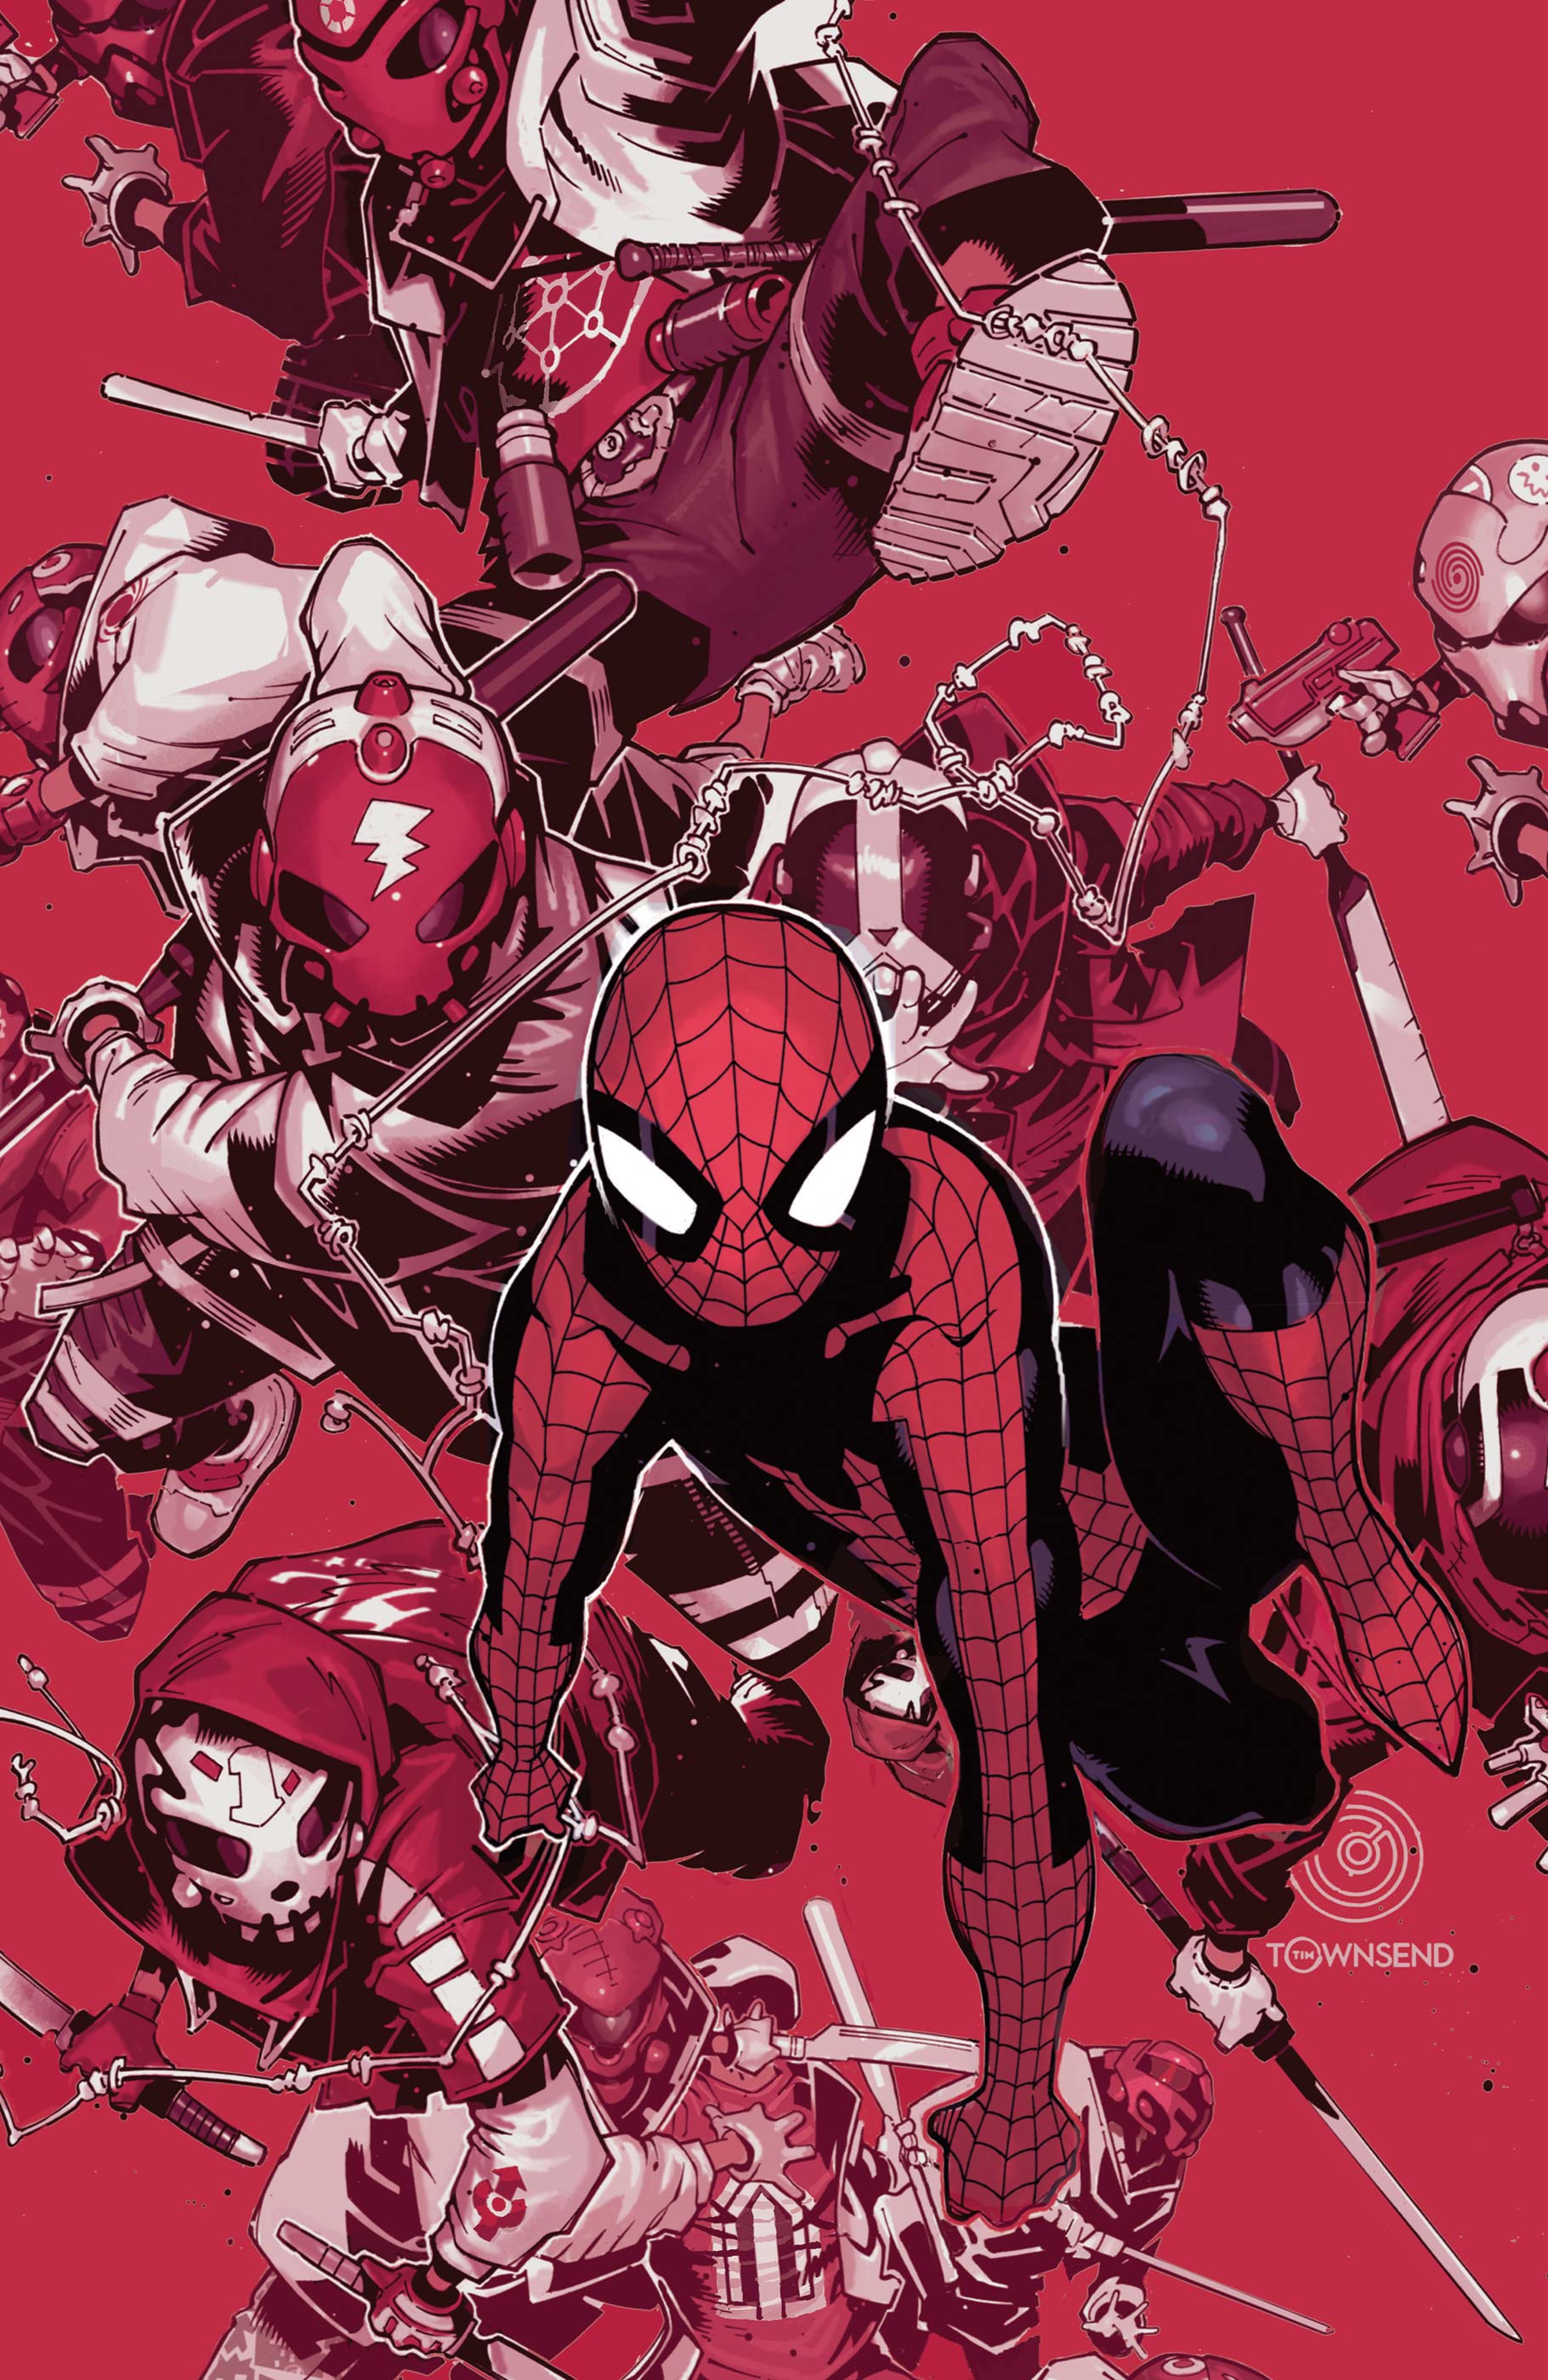 Non-Stop Spider-Man (2021) #1 (Variant)